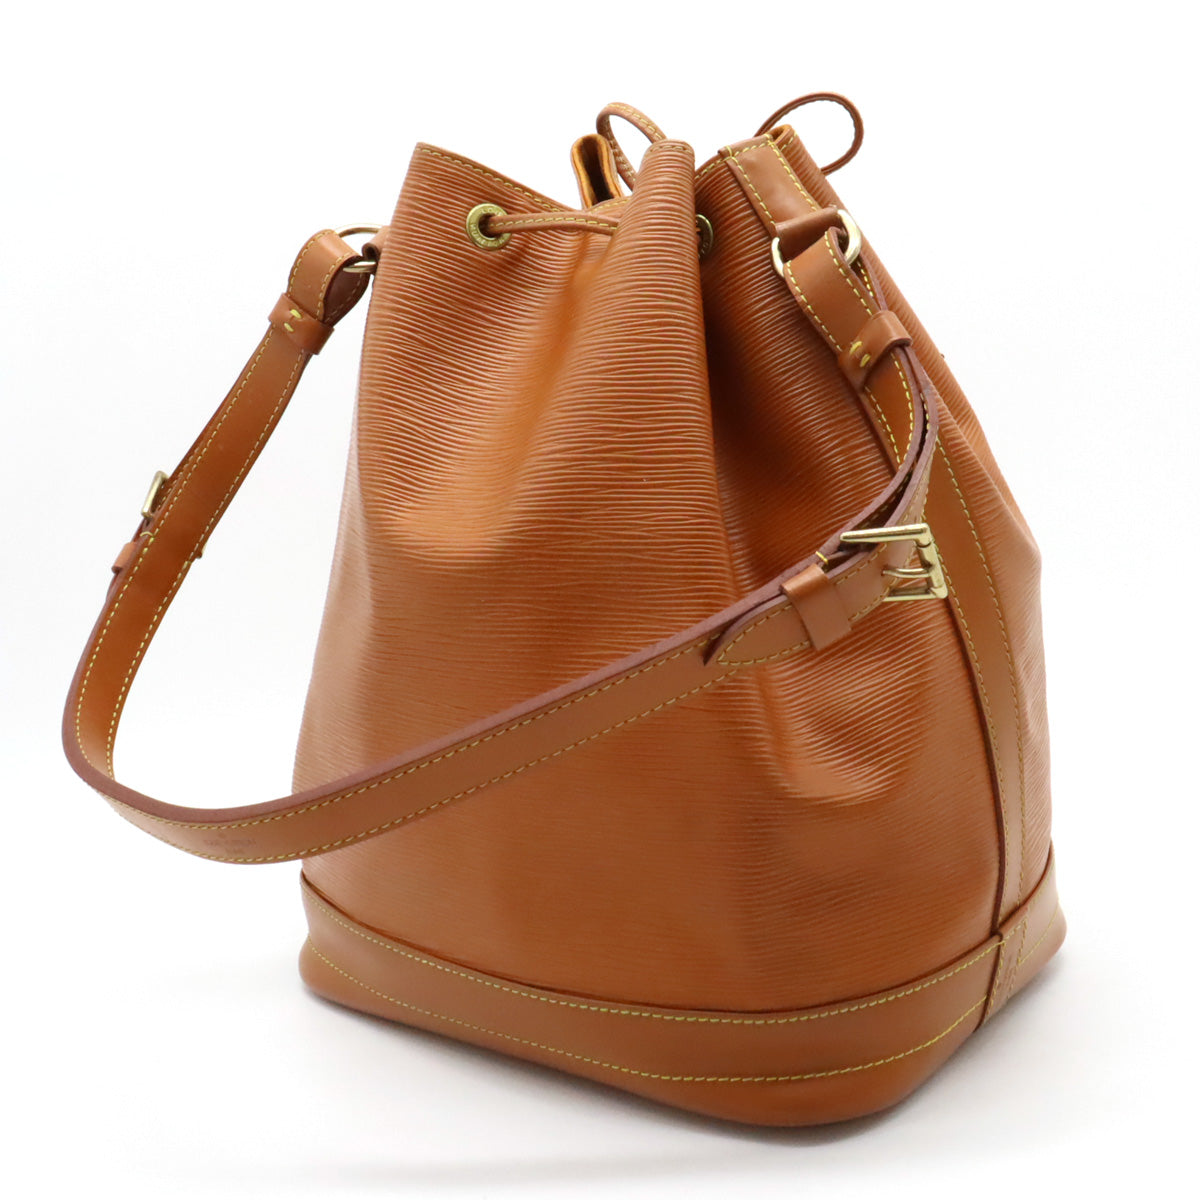 Louis Vuitton Epi Noe Shoulder Bag Camel M44008